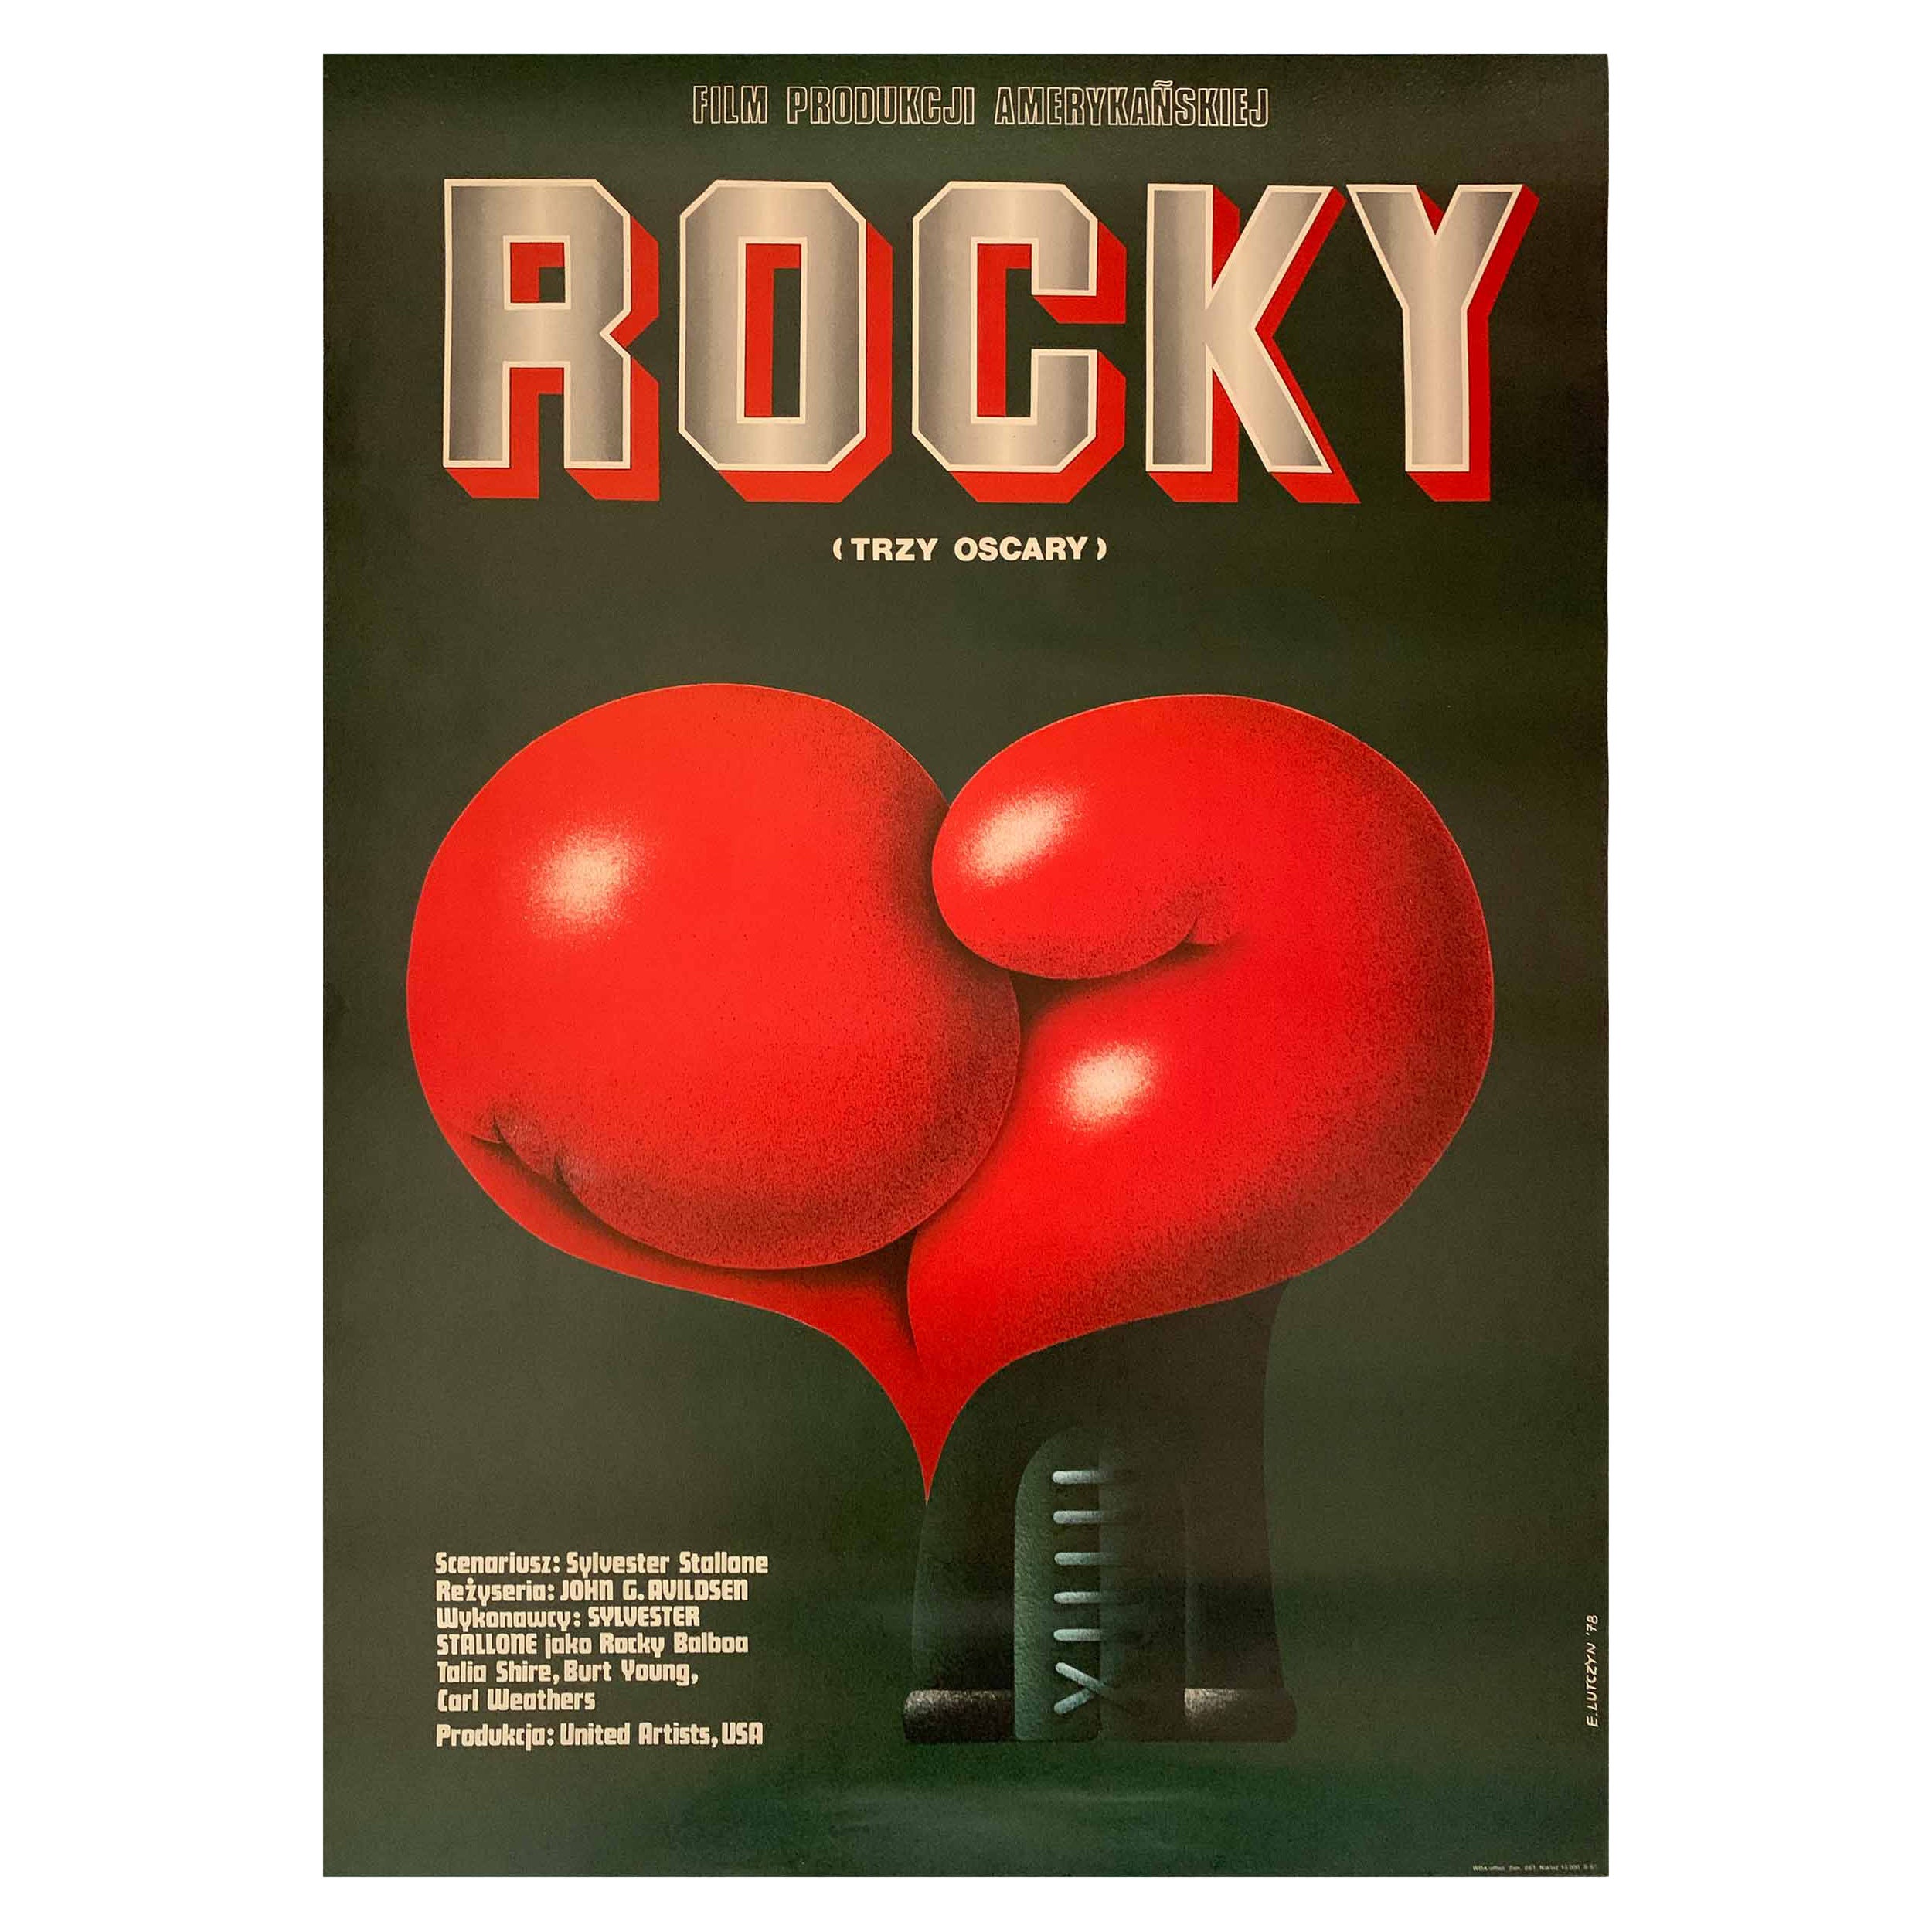 Rocky, affiche de film polonaise vintage d'Edward Lutczyn, 1978 